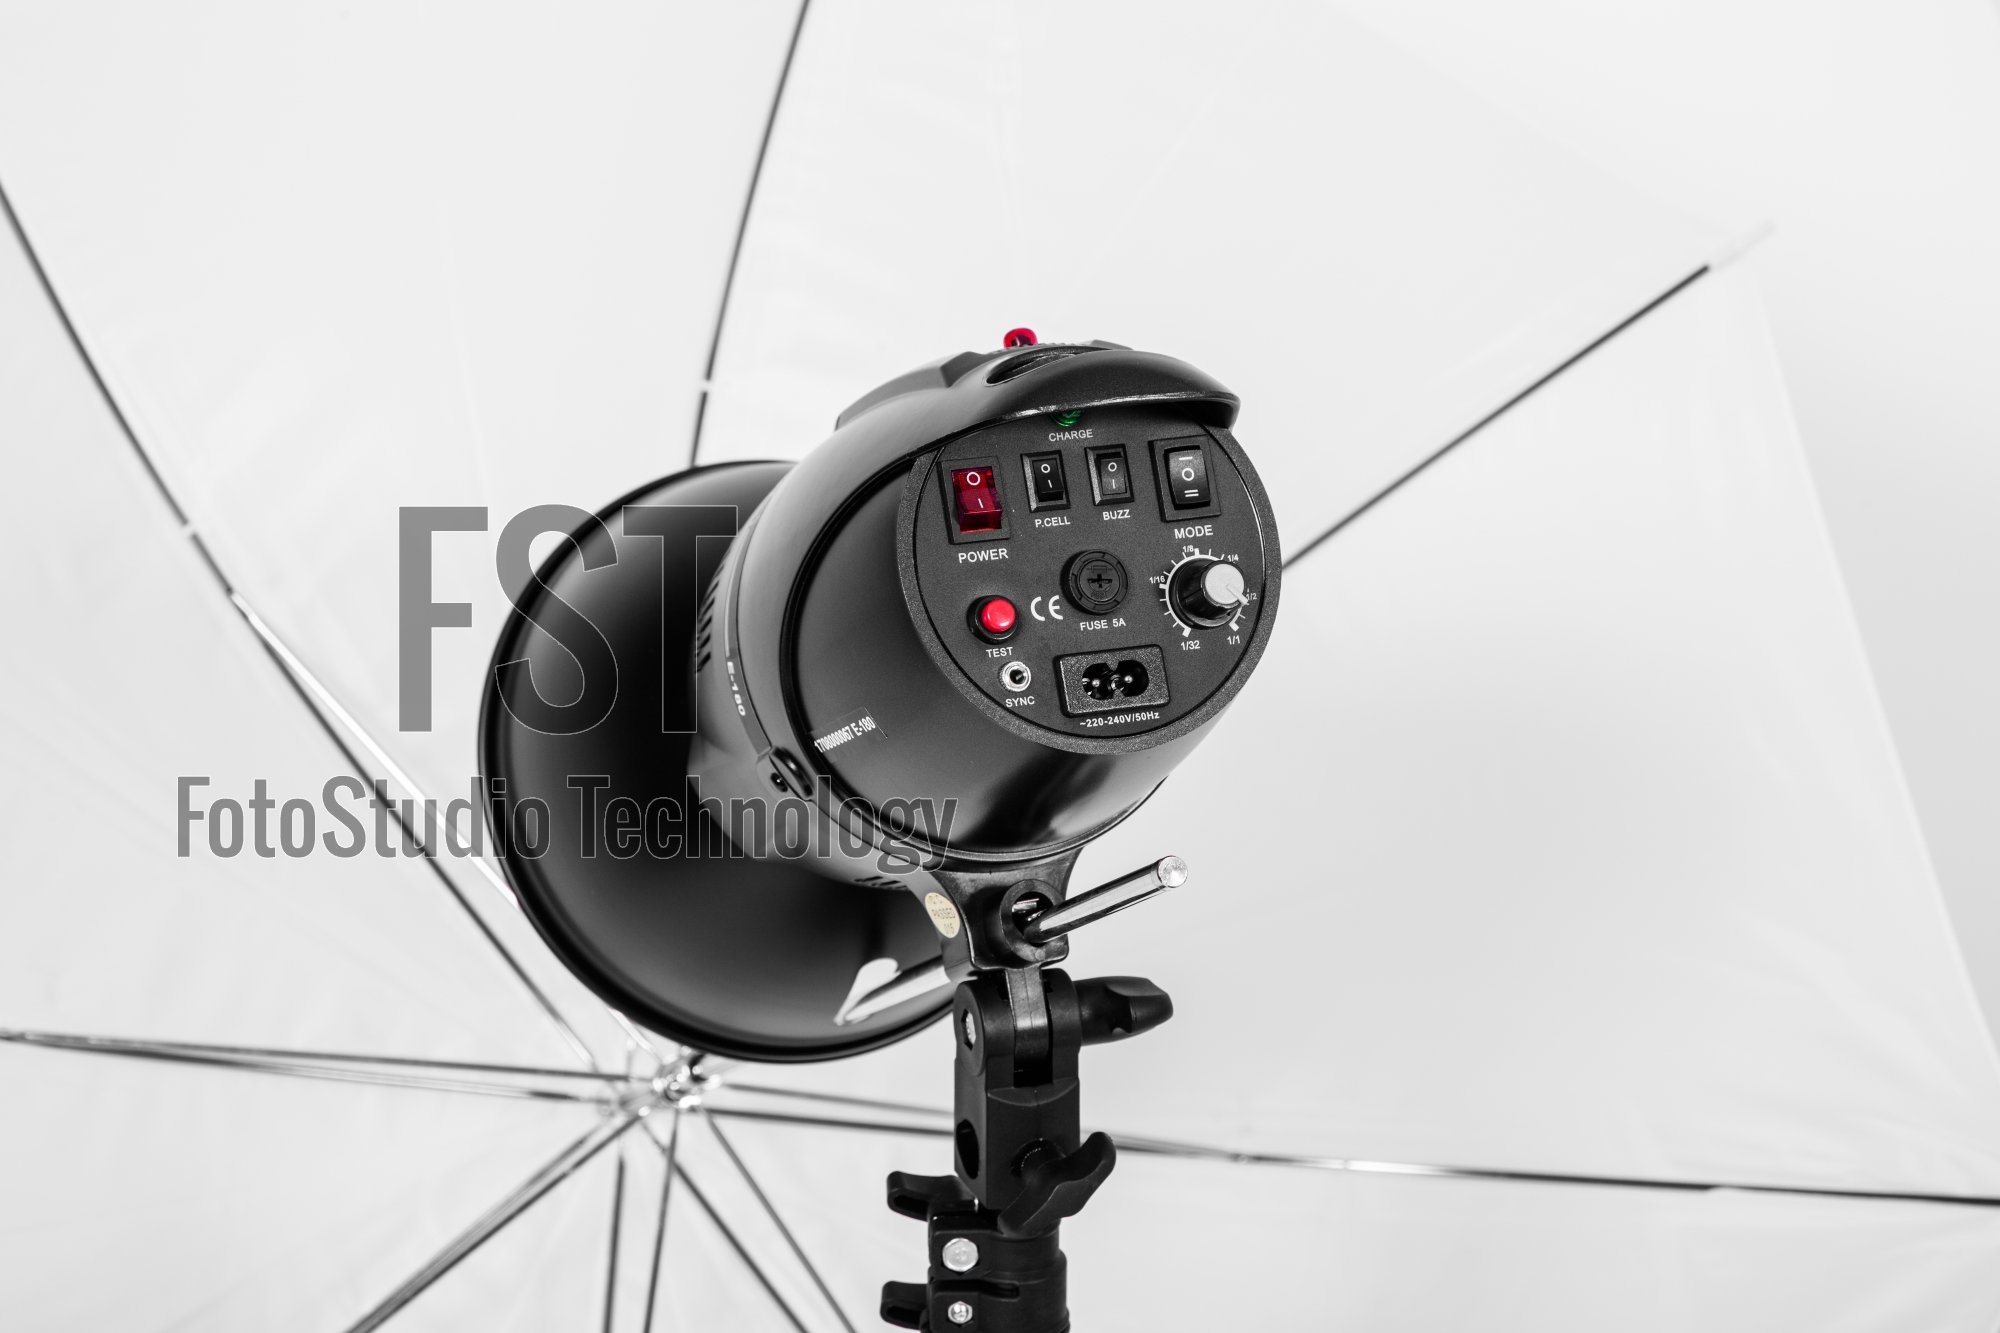 Комплект импульсного света FST E-180 Umbrella Kit + радиосинхронизатор FST VC-604DC в подарок!